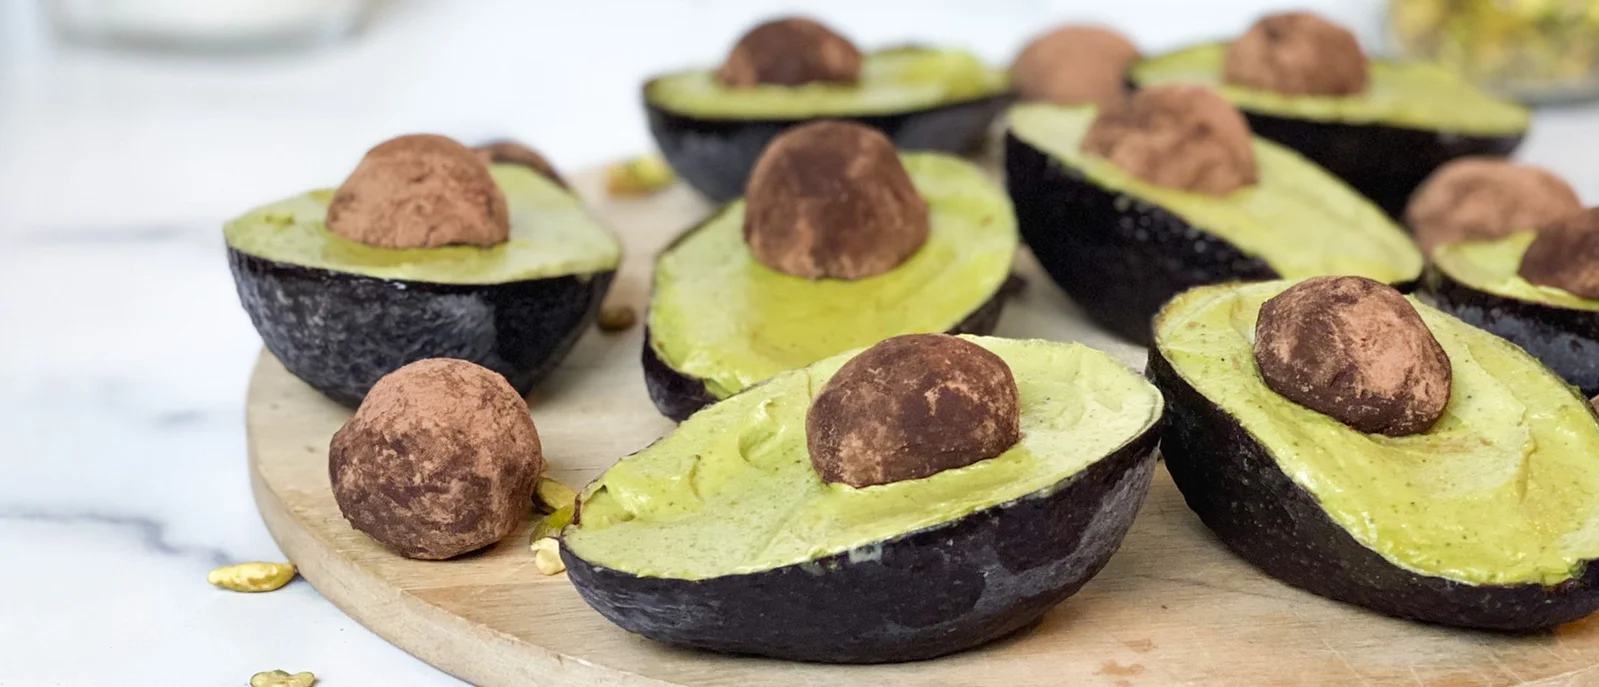 Several vanilla bean avocado ice creams in avocado skins with a chocolate truffle as a pit.  